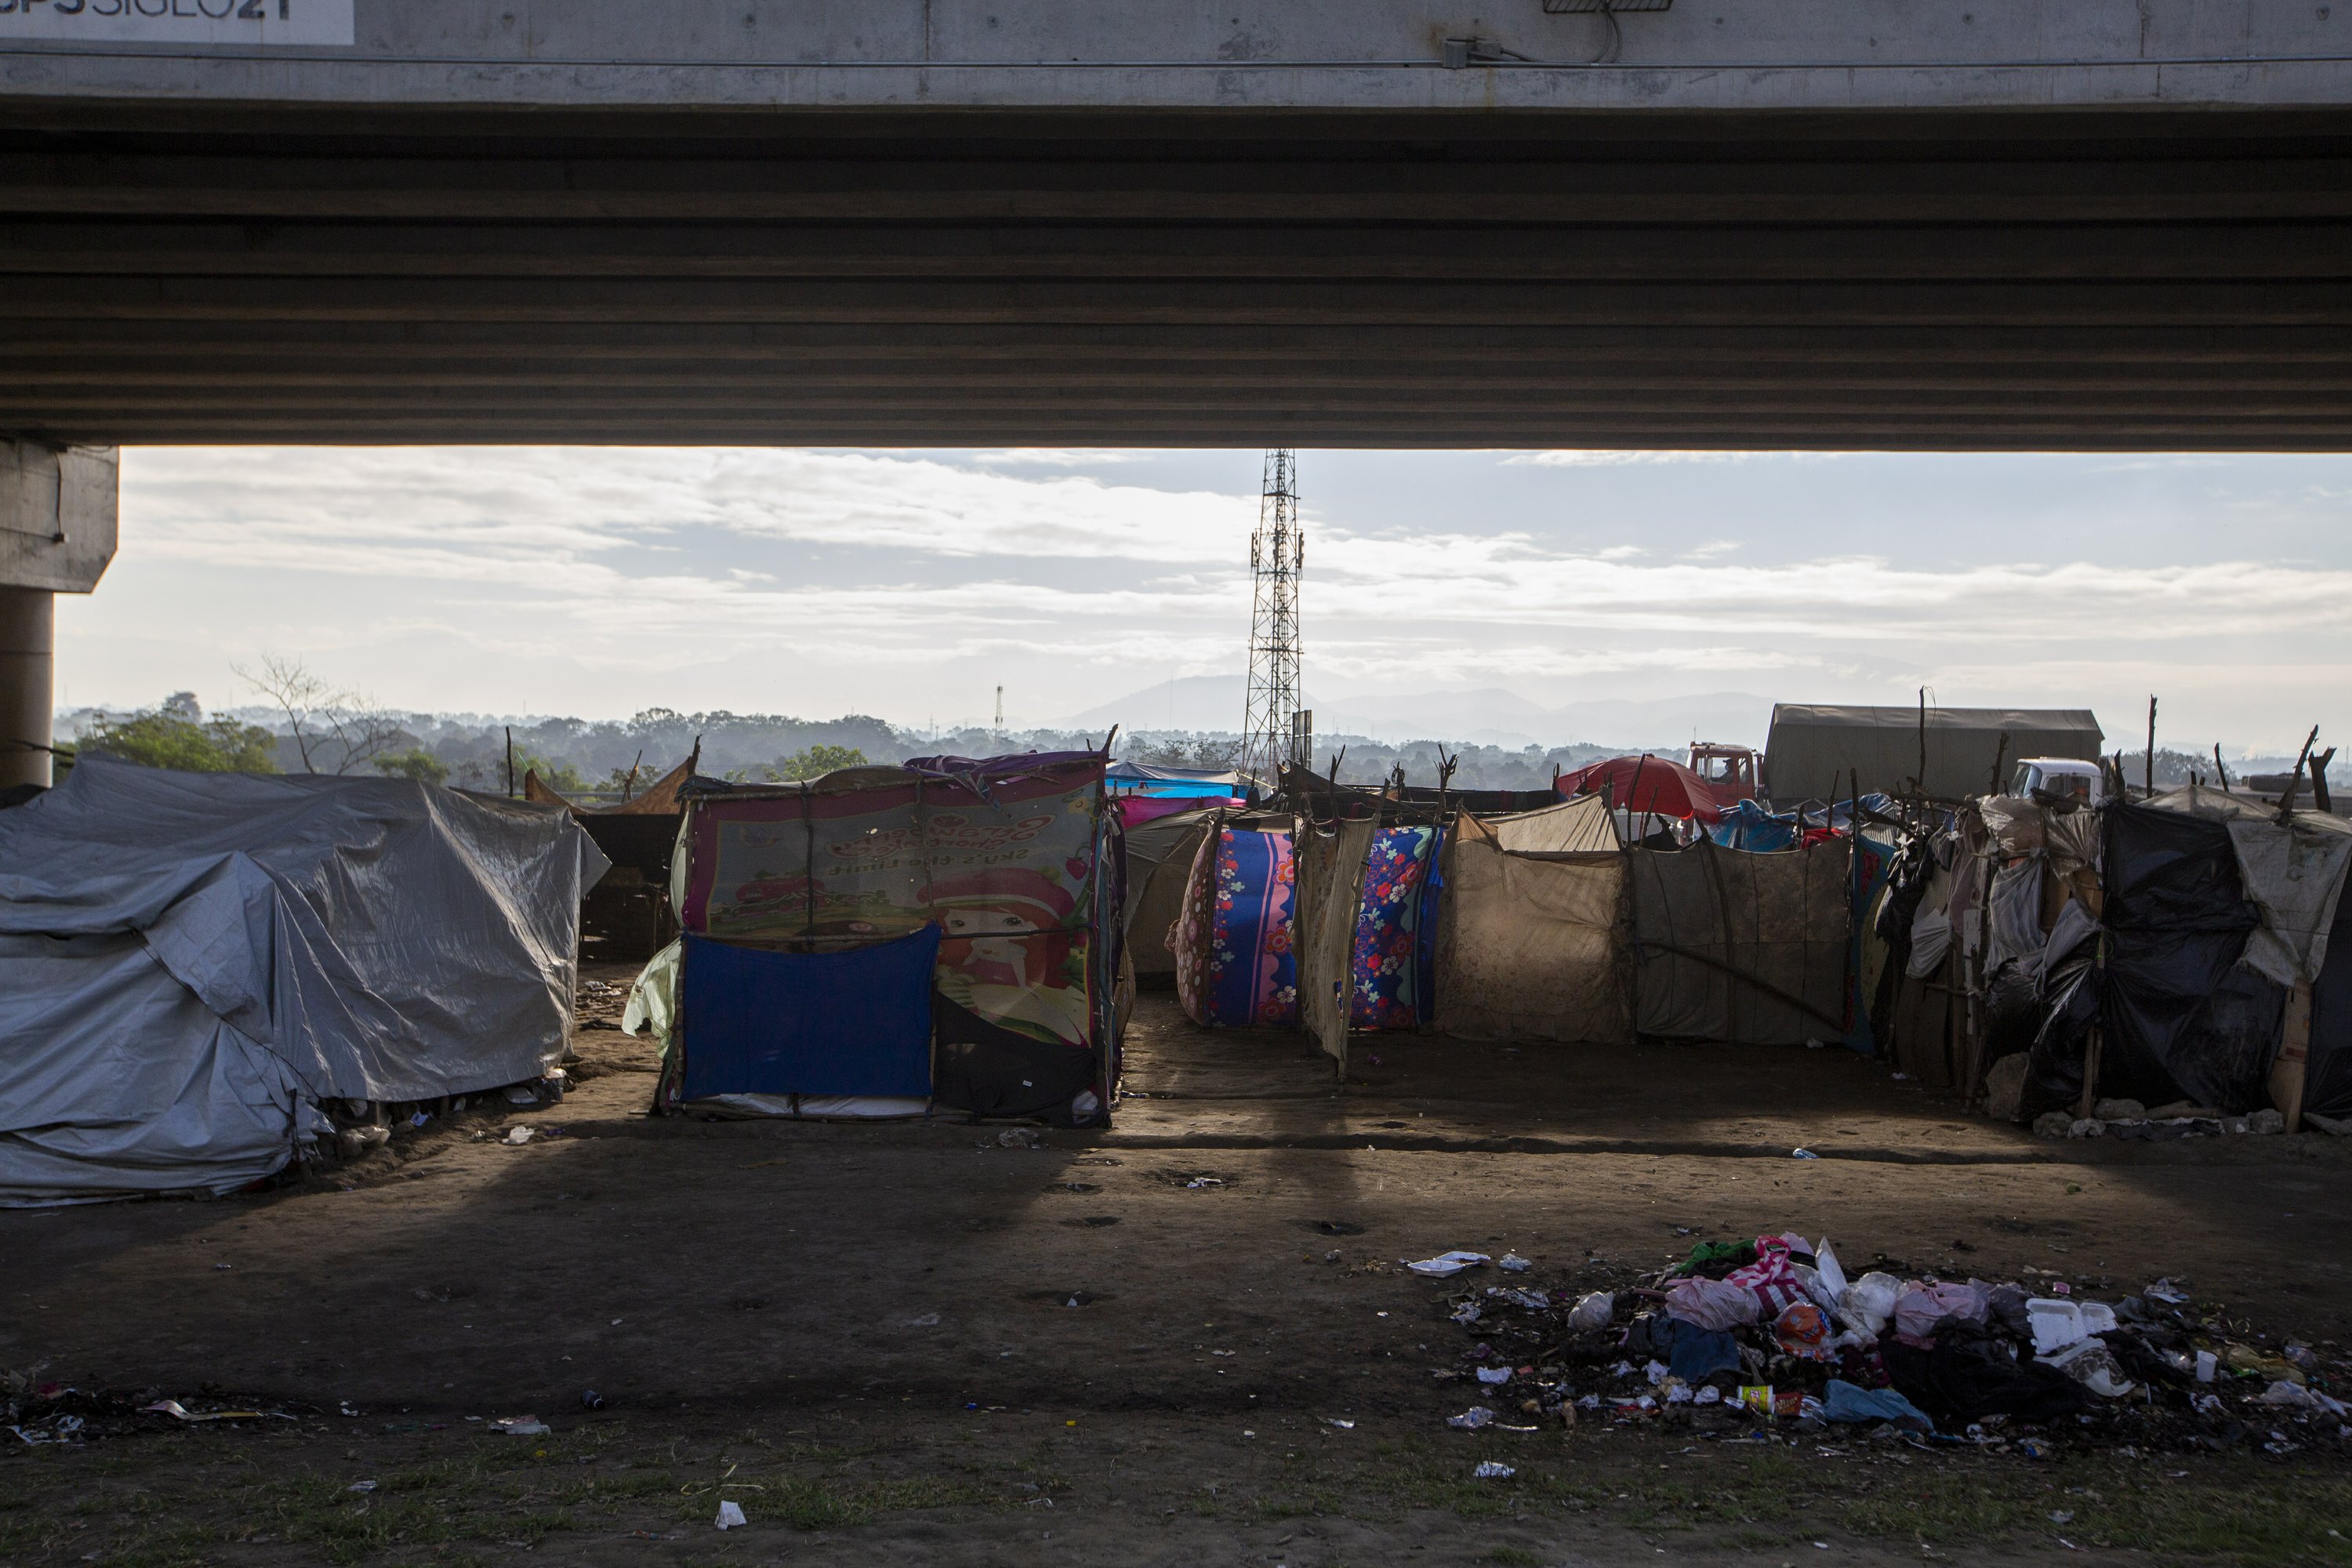 Desperation grows in battered Honduras, which fuels migration